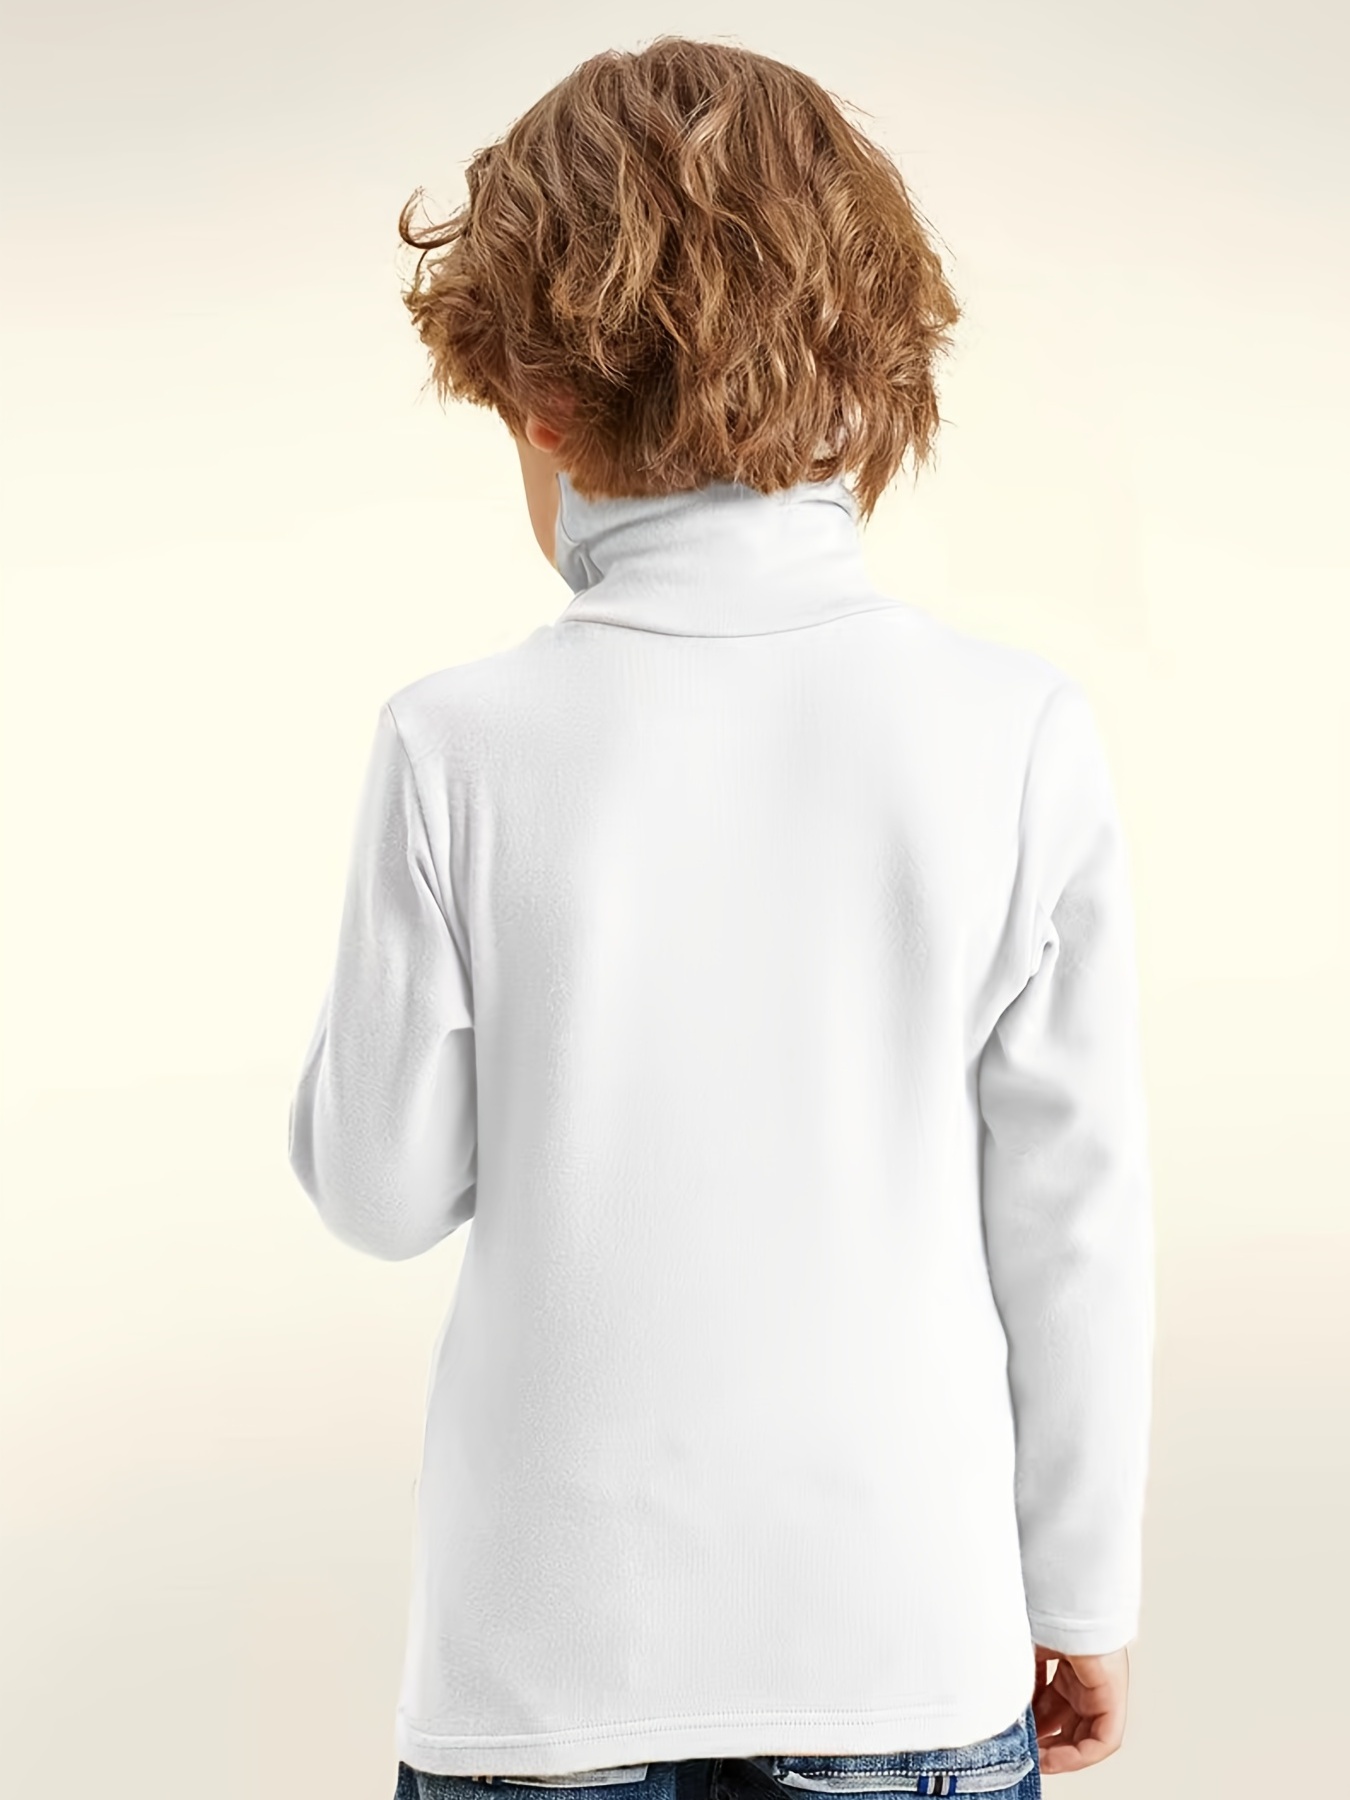 Camiseta manga larga niño blanca